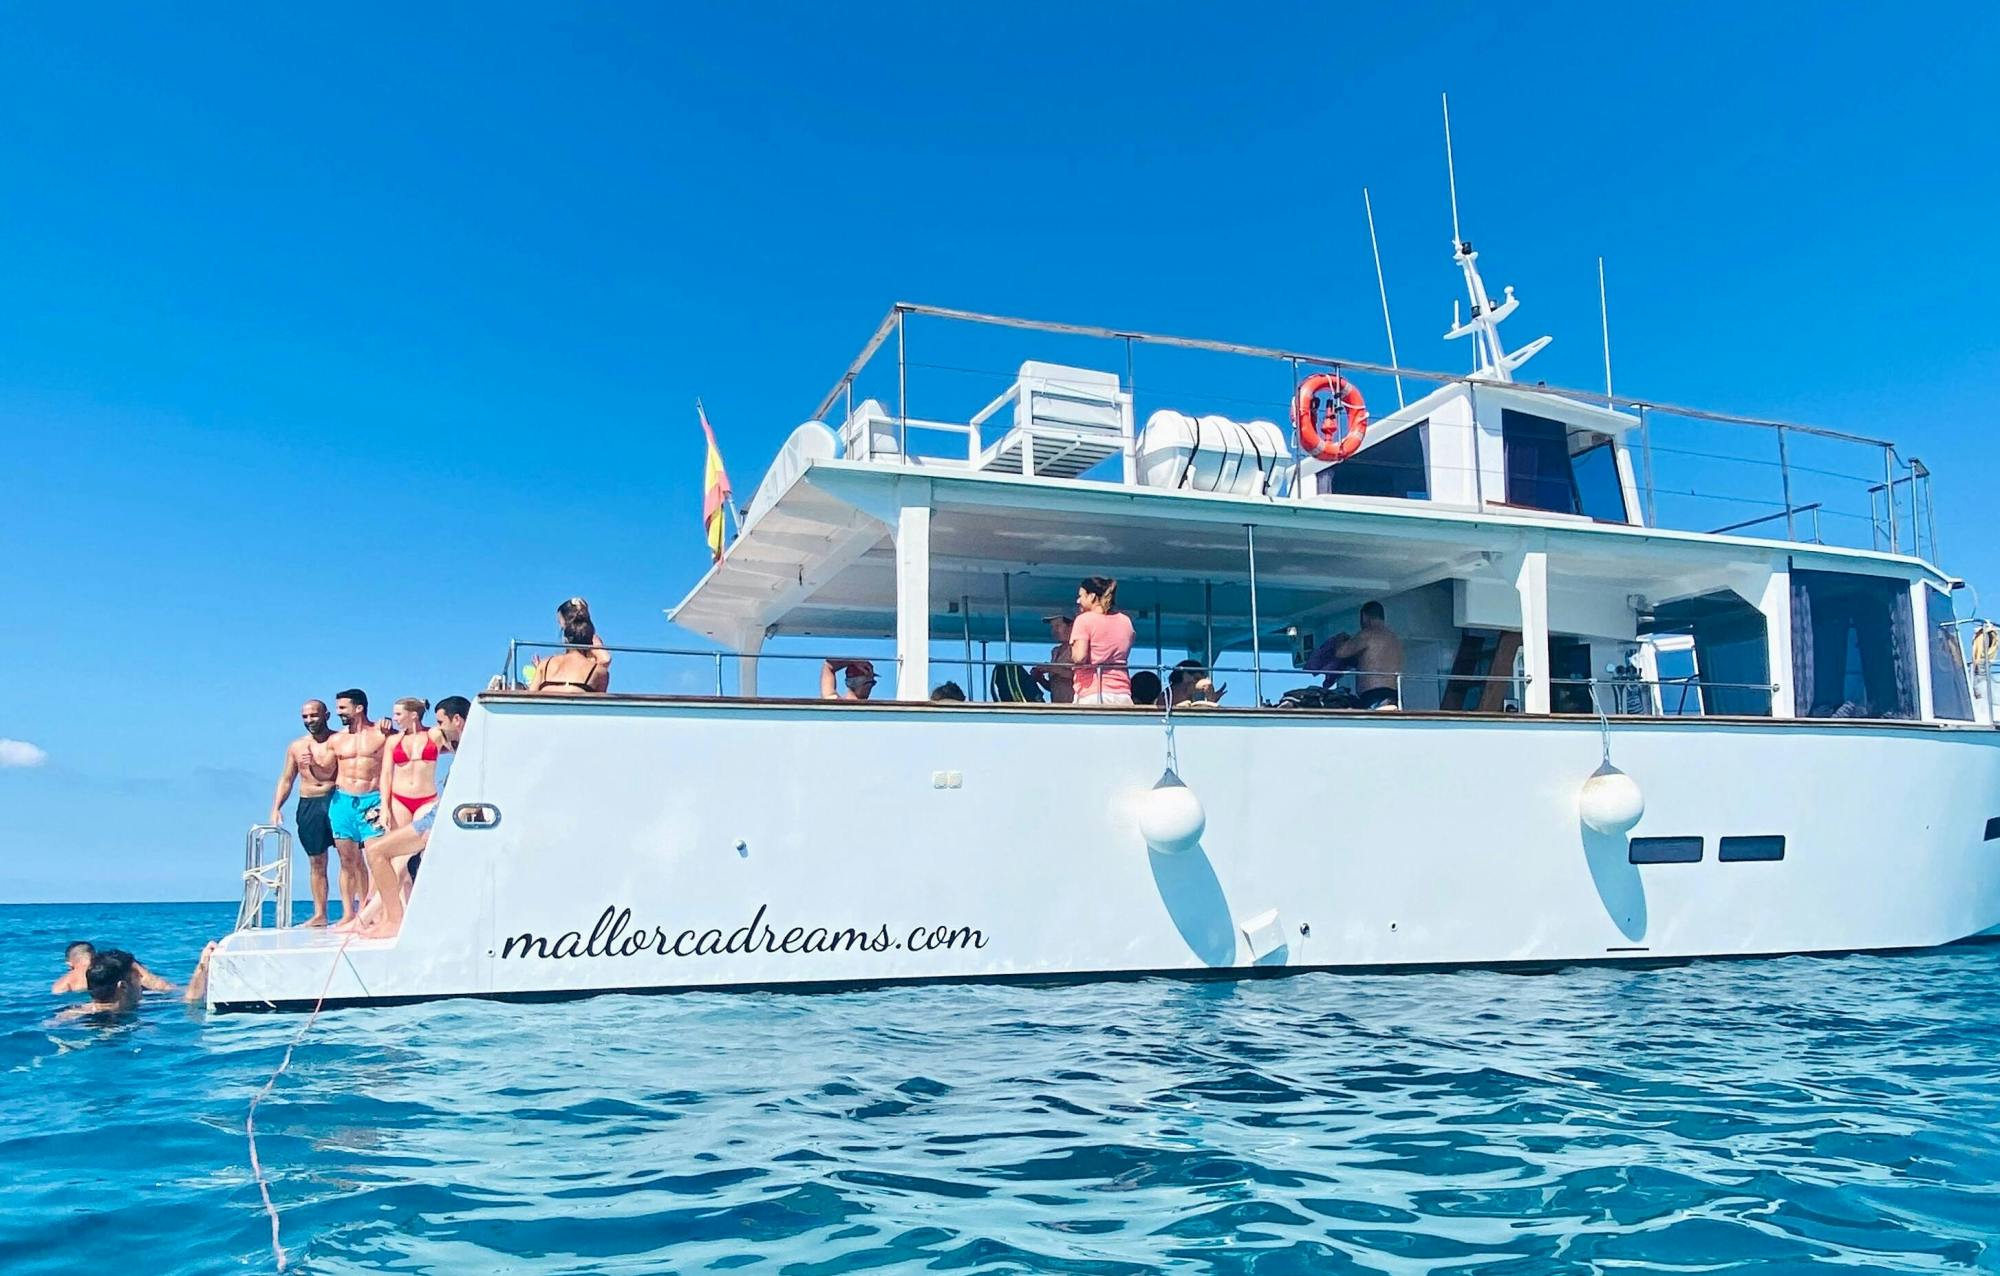 Majorca Dreams Cruise - Ticket Only